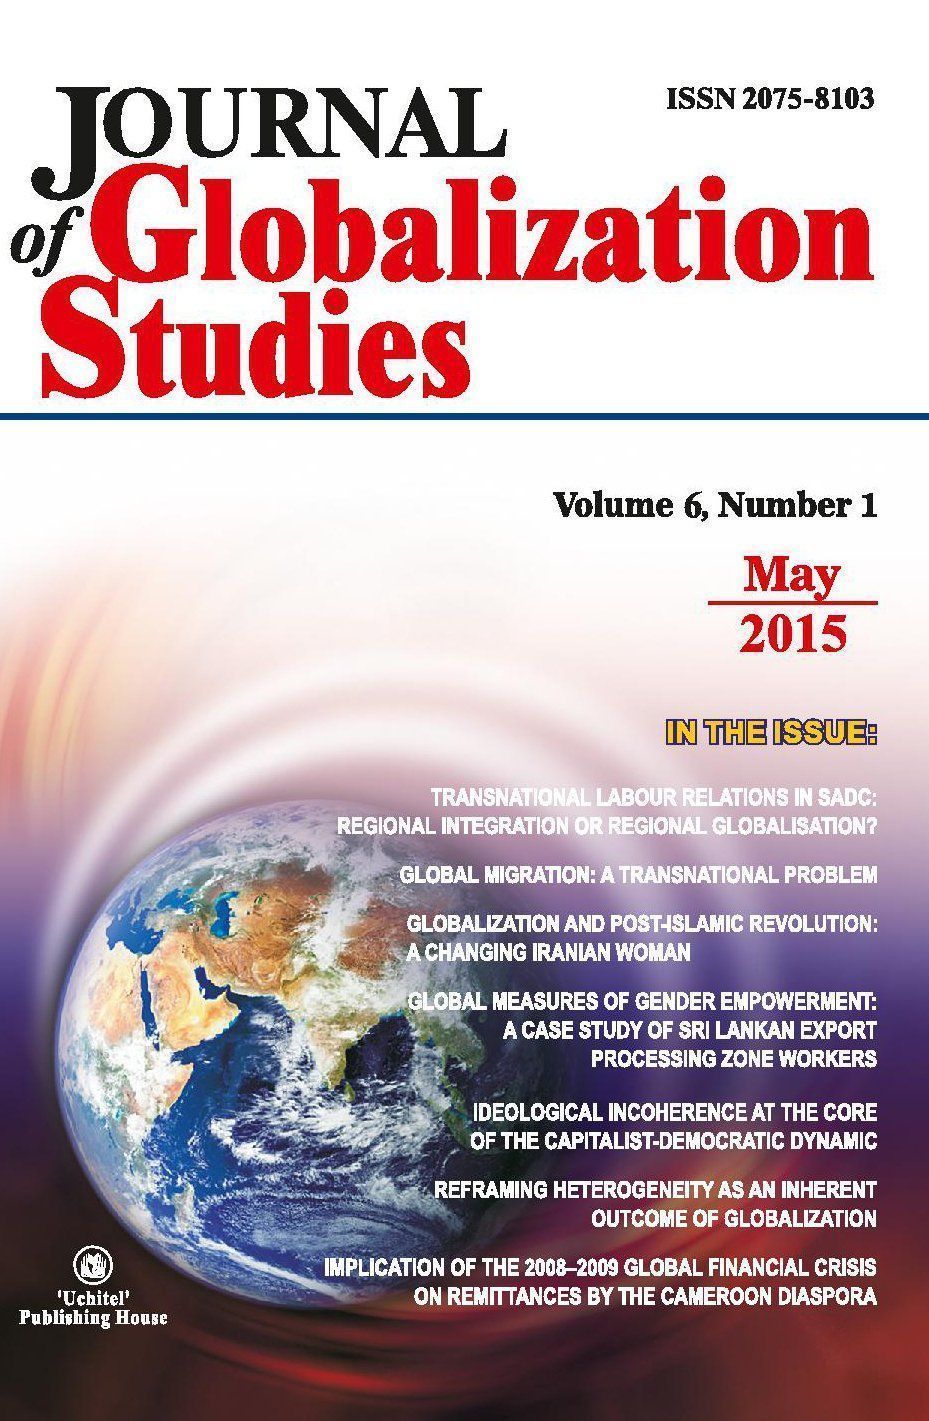 Journal of Globalization Studies Volume 6, Number 1, 2015 г. Журнал глобализационных исследований Международный журнал на английском языке